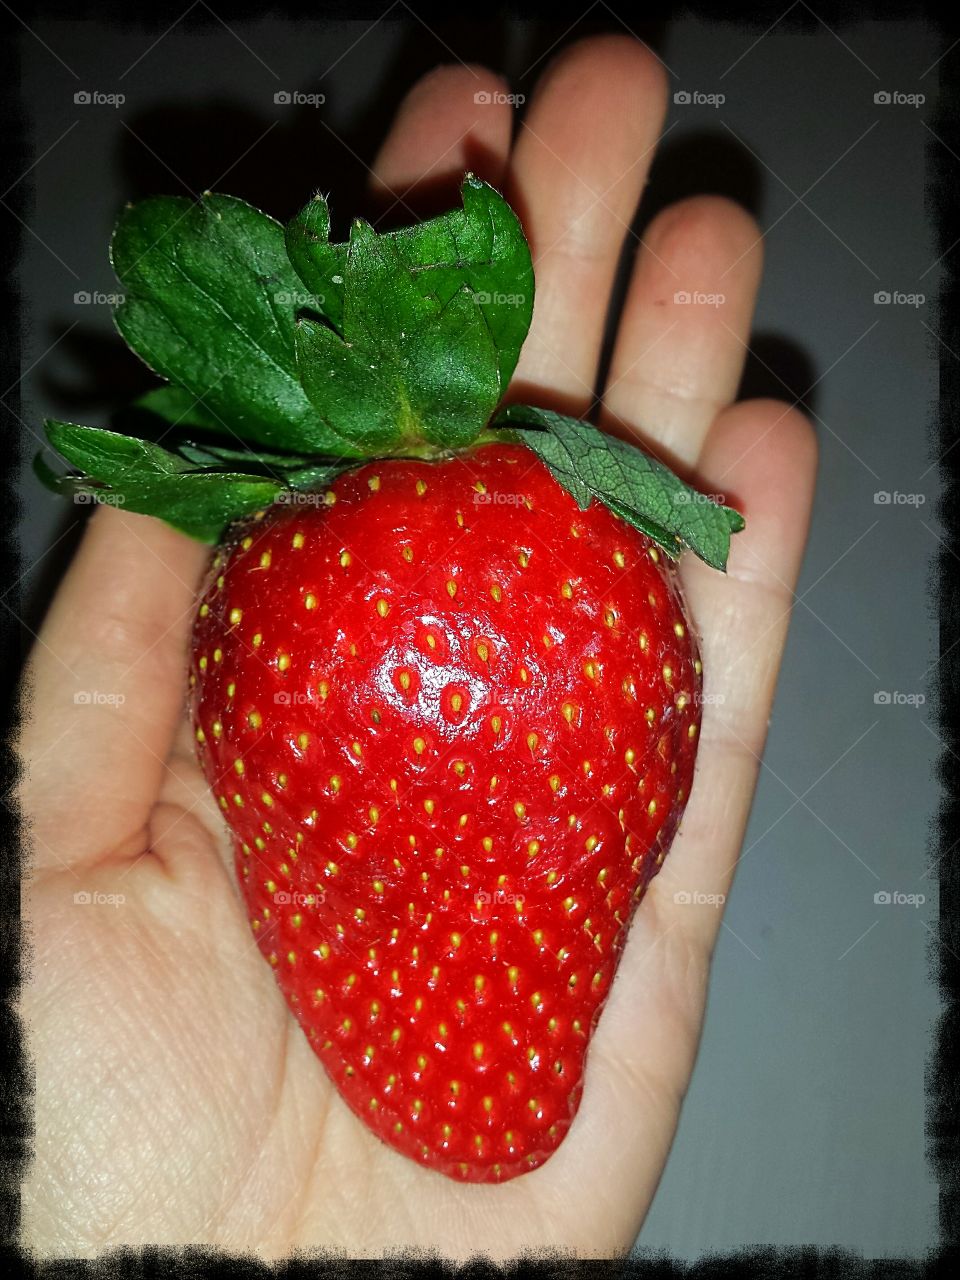 I love strawsberry